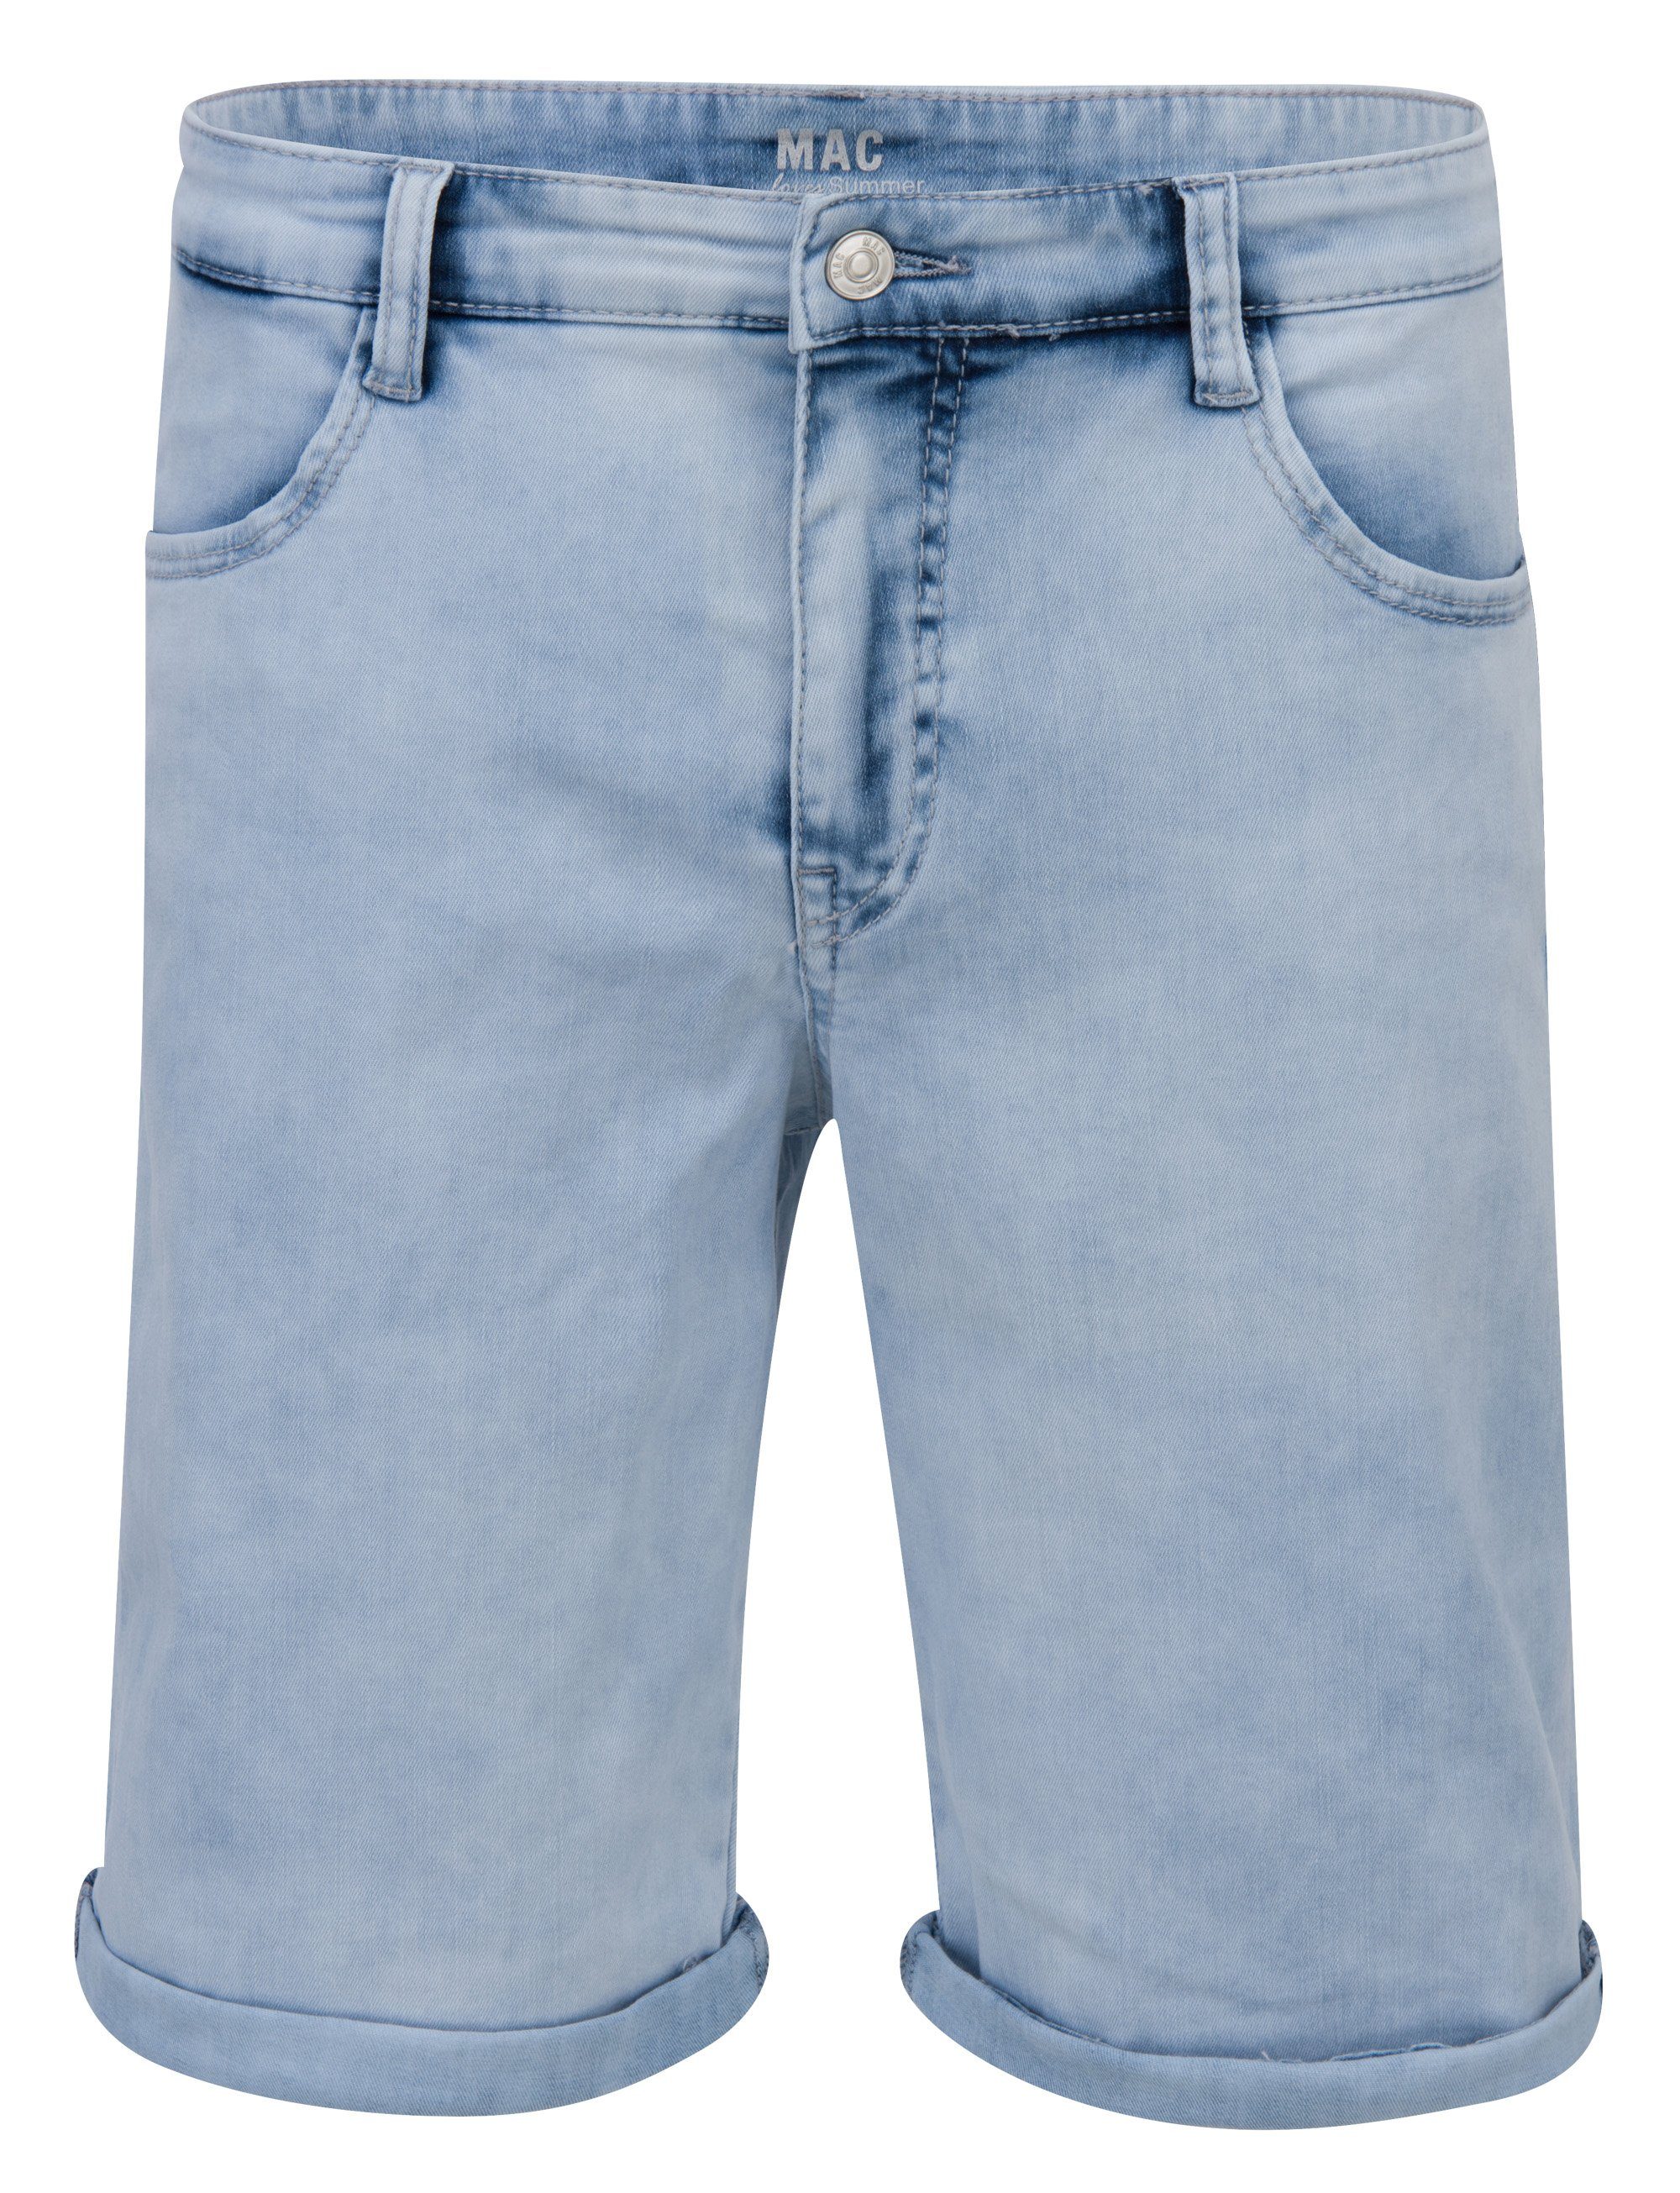 MAC Stretch-Jeans MAC SHORTY fancy blue bleached 2387-90-0396 D045